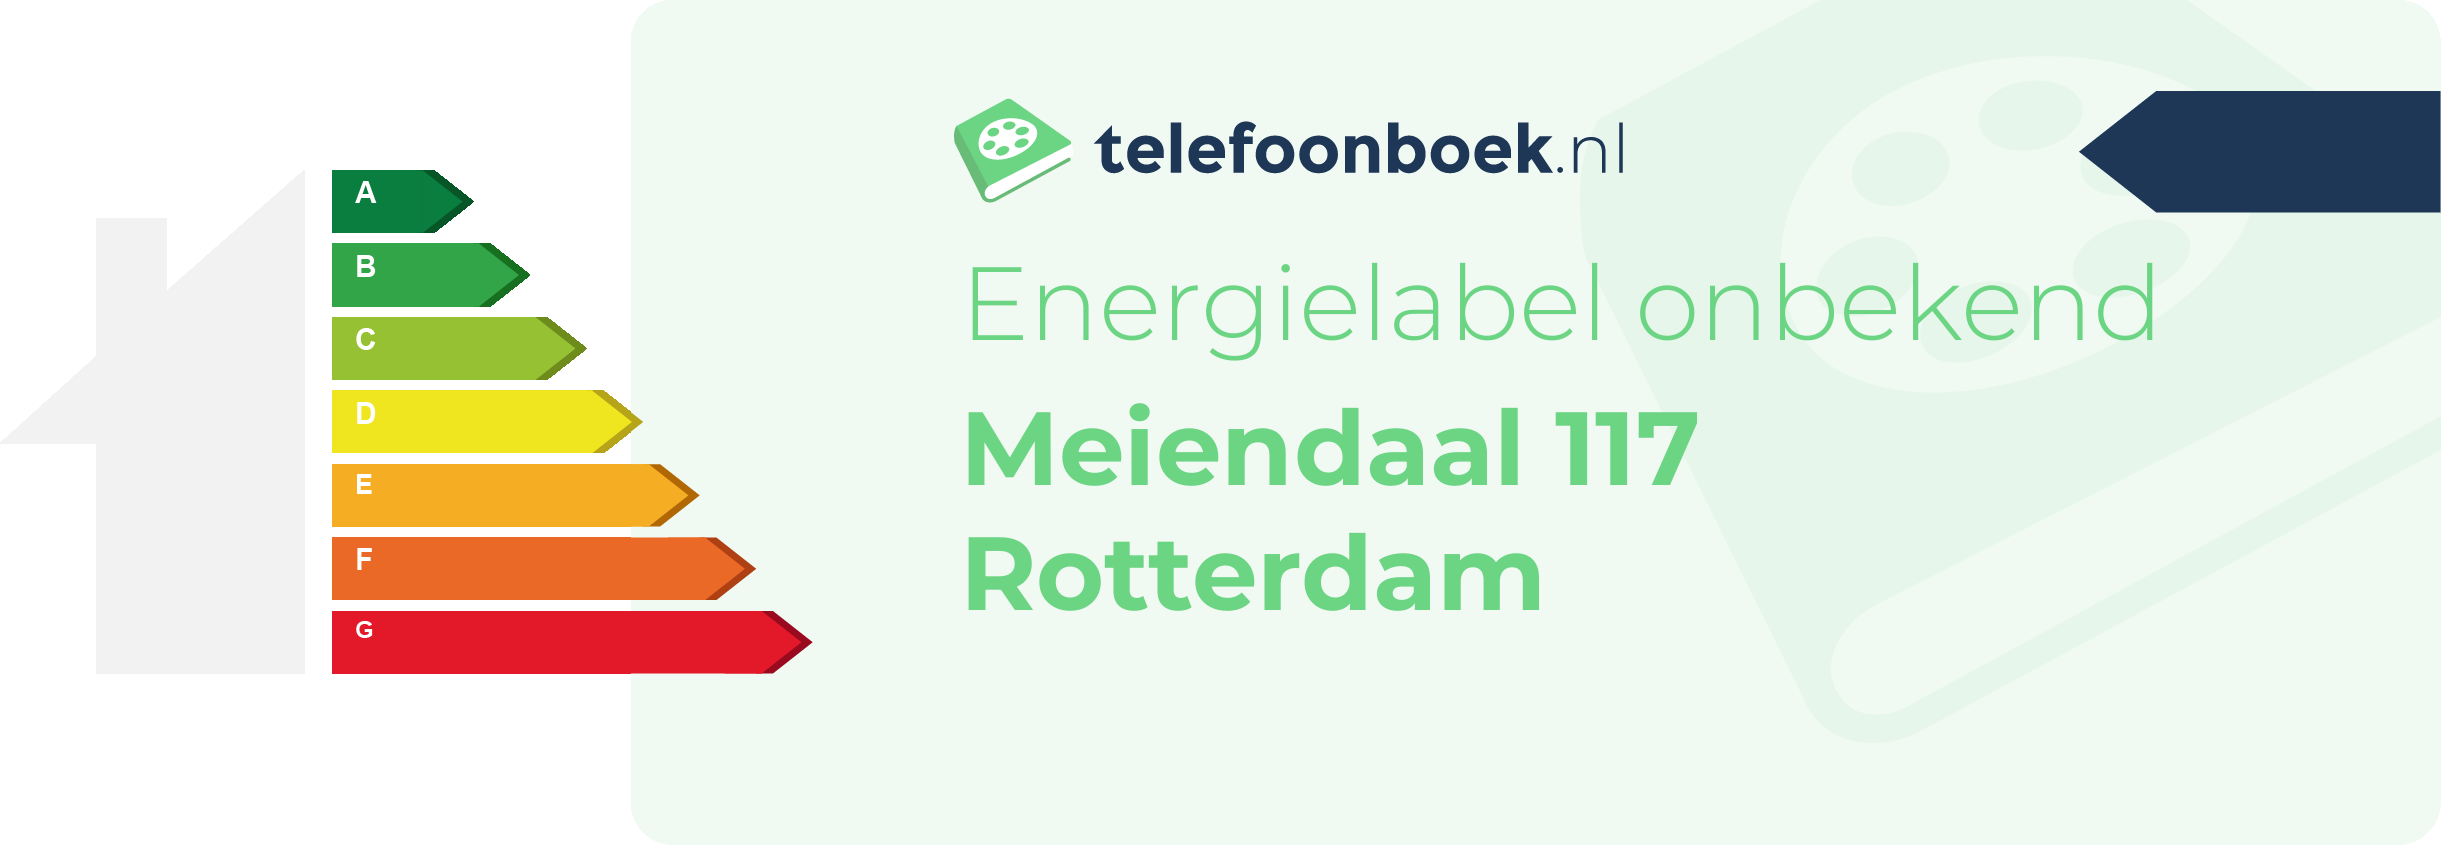 Energielabel Meiendaal 117 Rotterdam